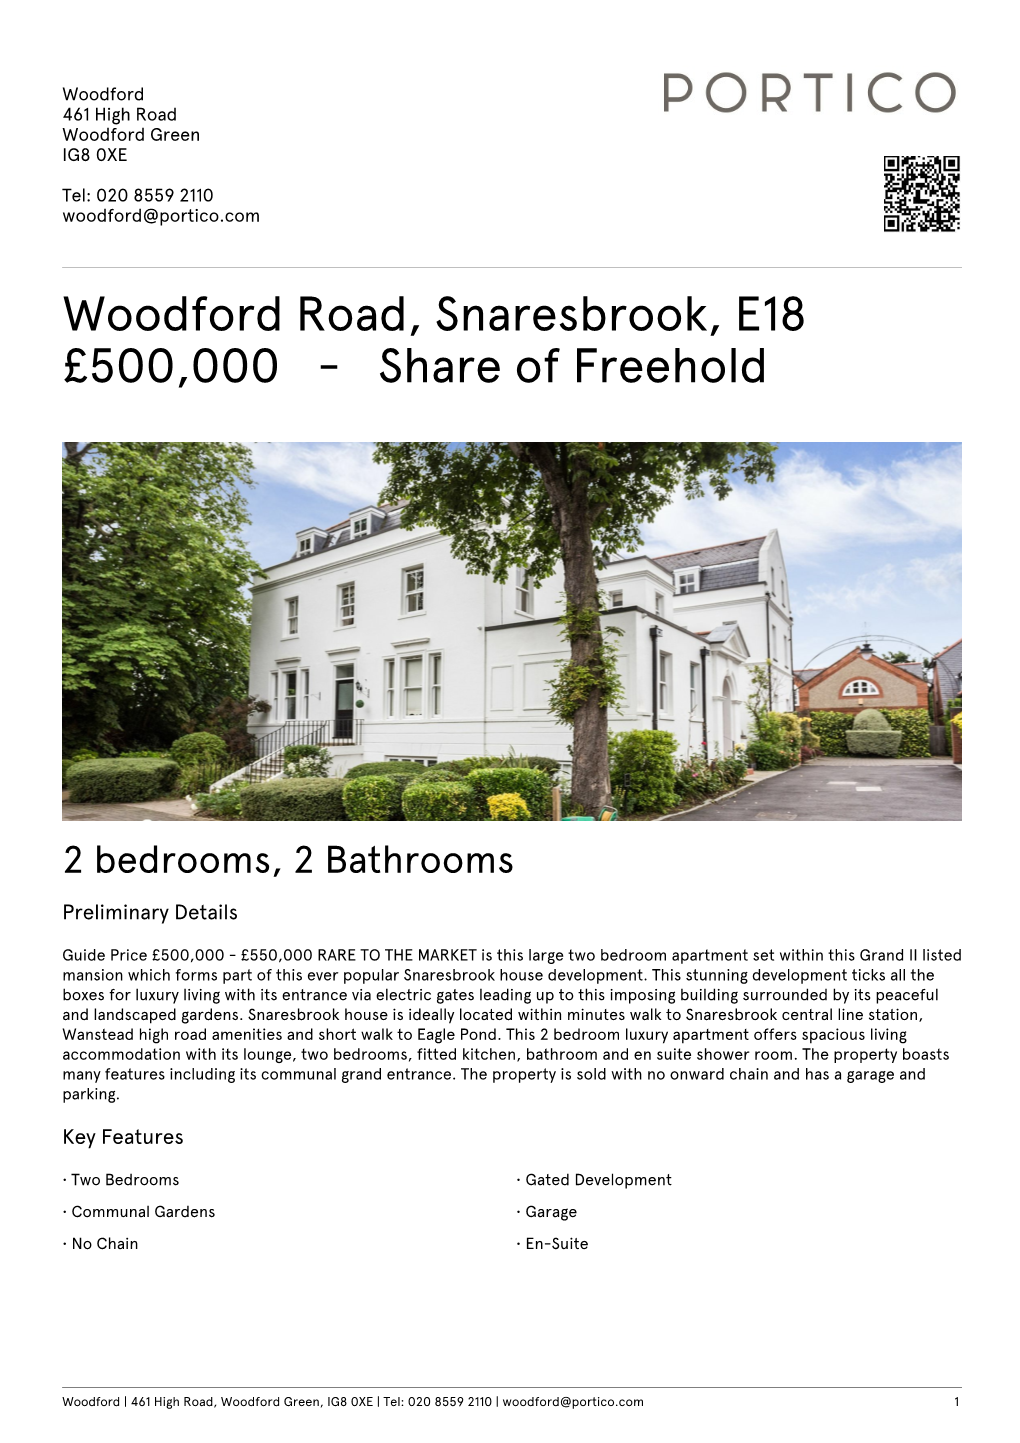 Woodford Road, Snaresbrook, E18 £500,000